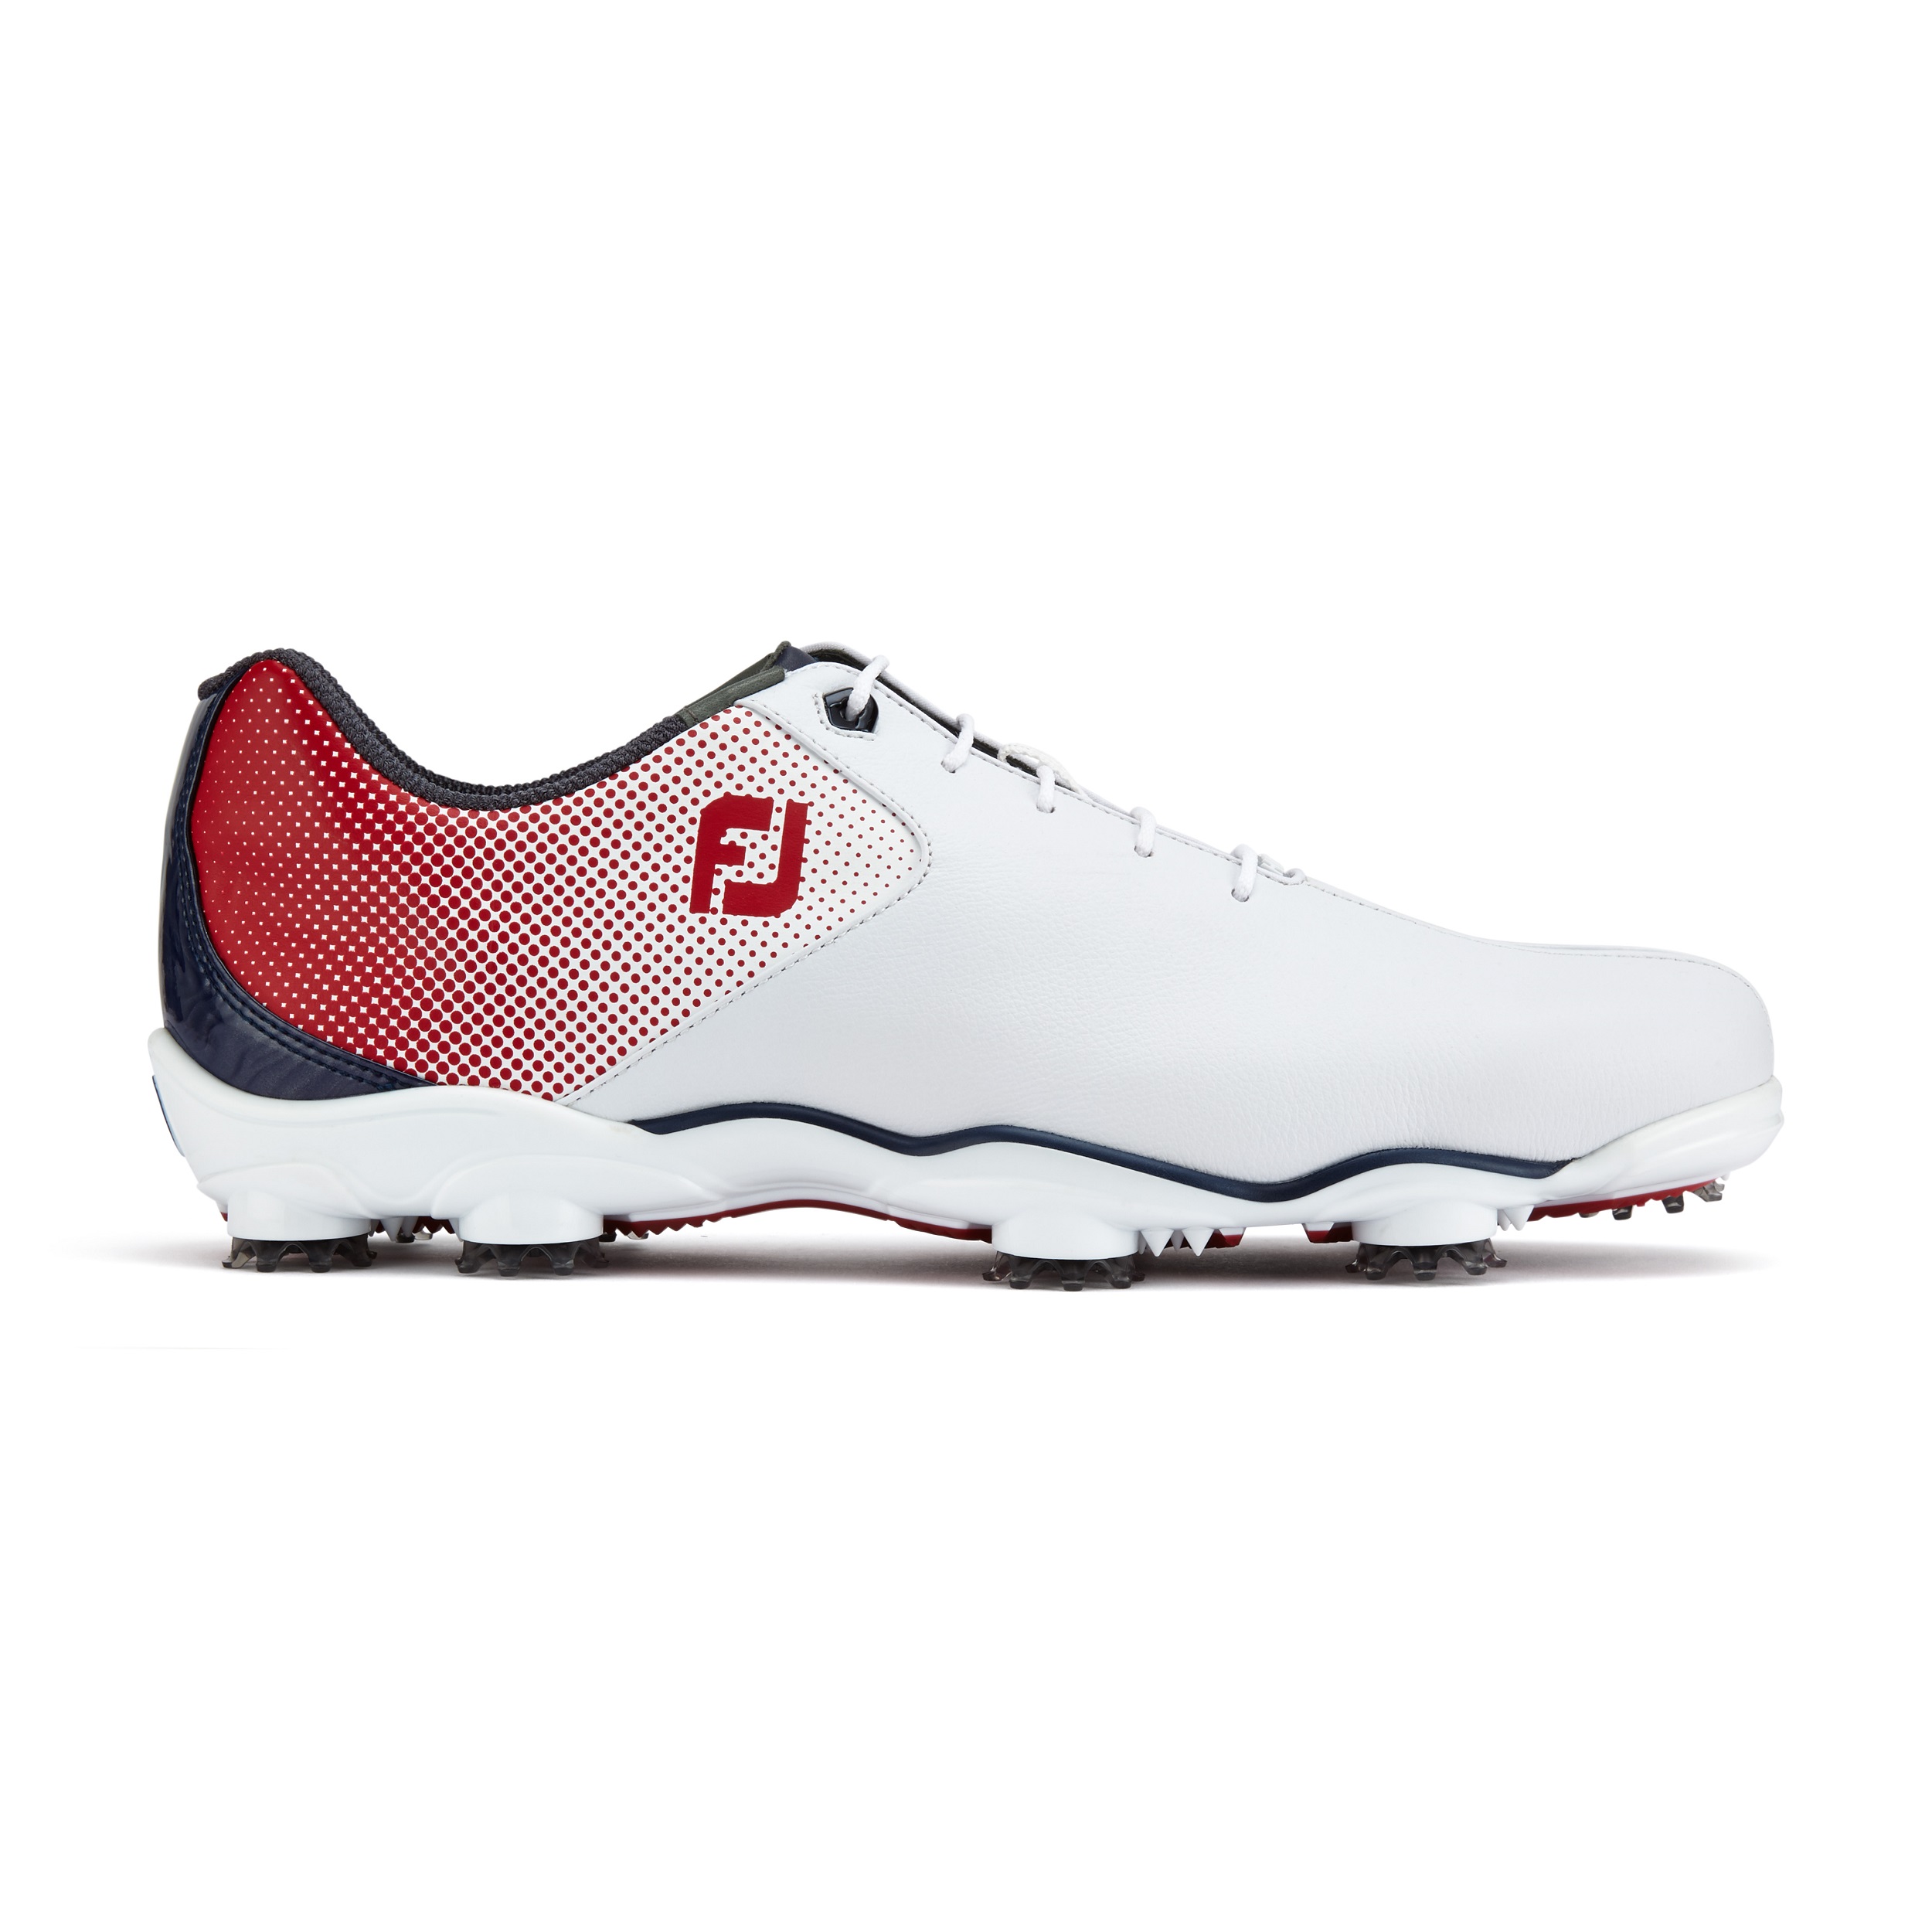 FootJoy launches D.N.A. Helix golf shoe